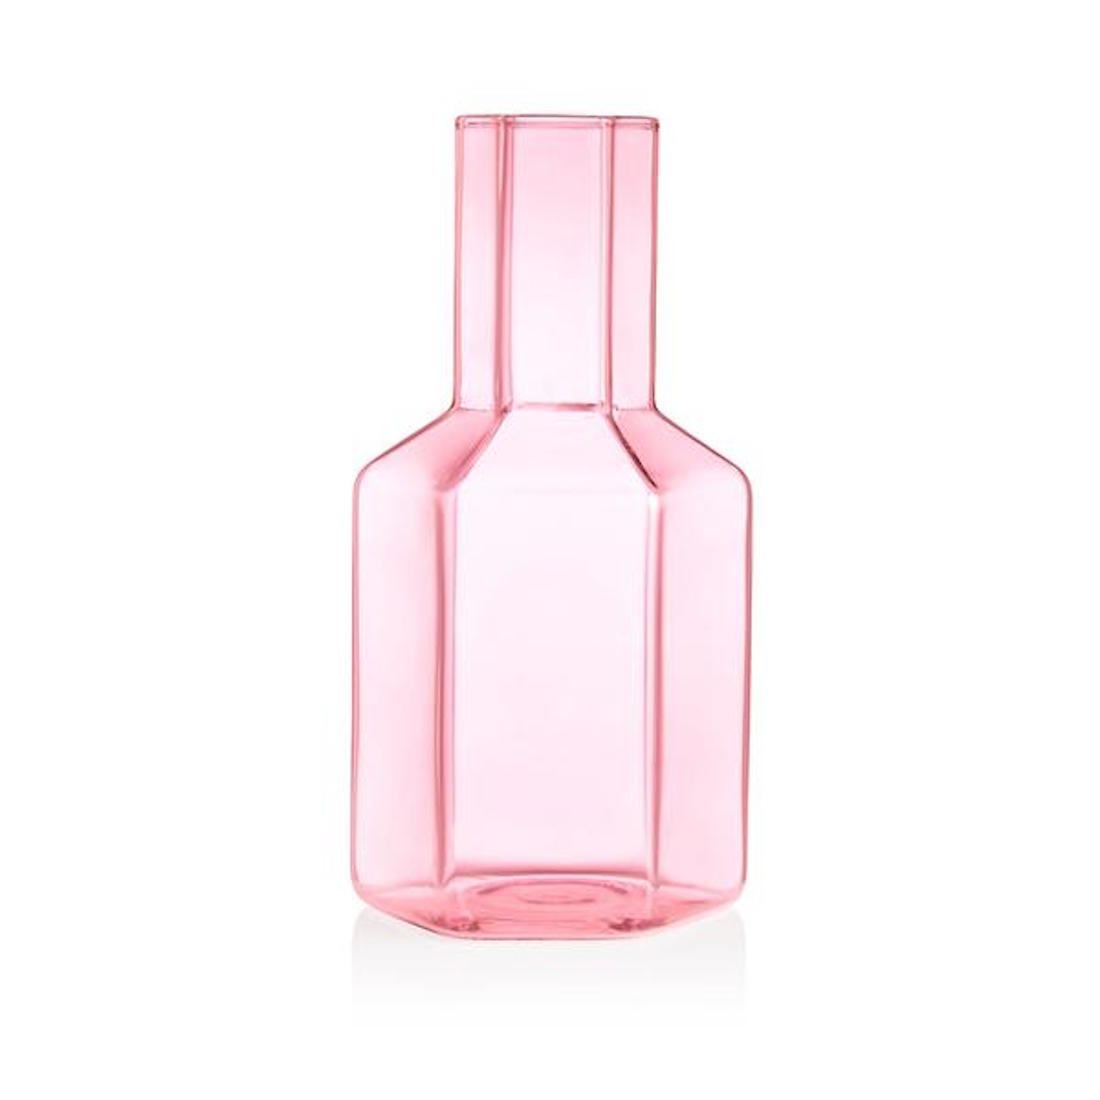 A pink glass carafe.